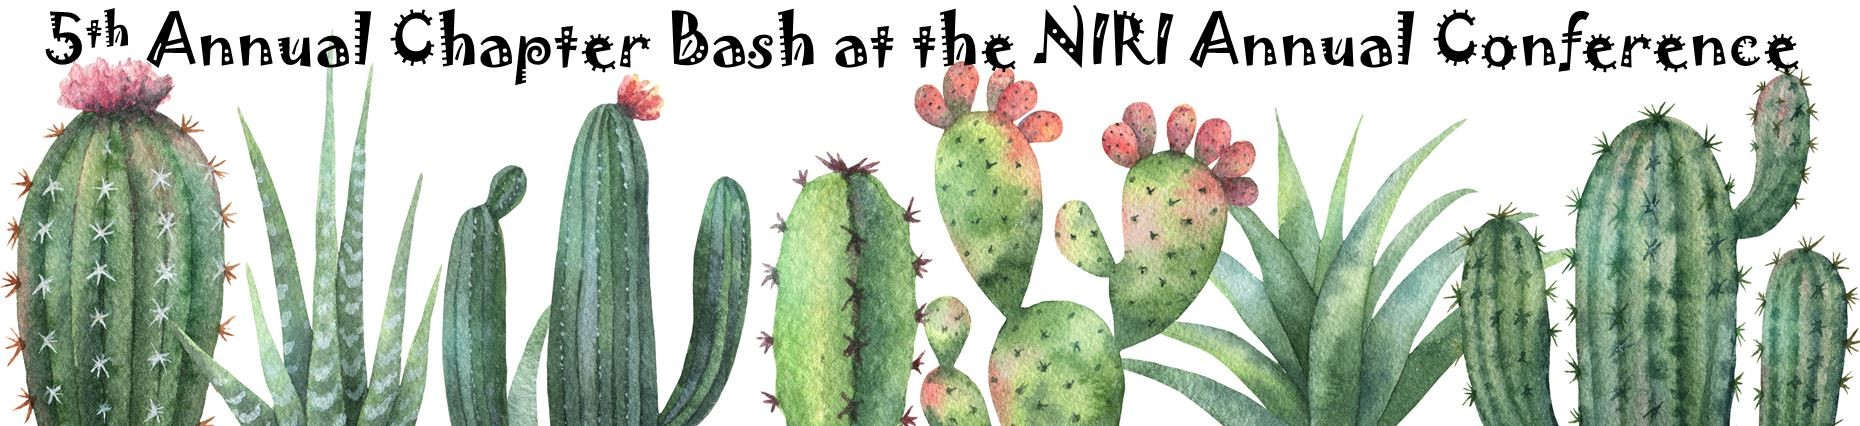 Niri decorative invitation with cacti